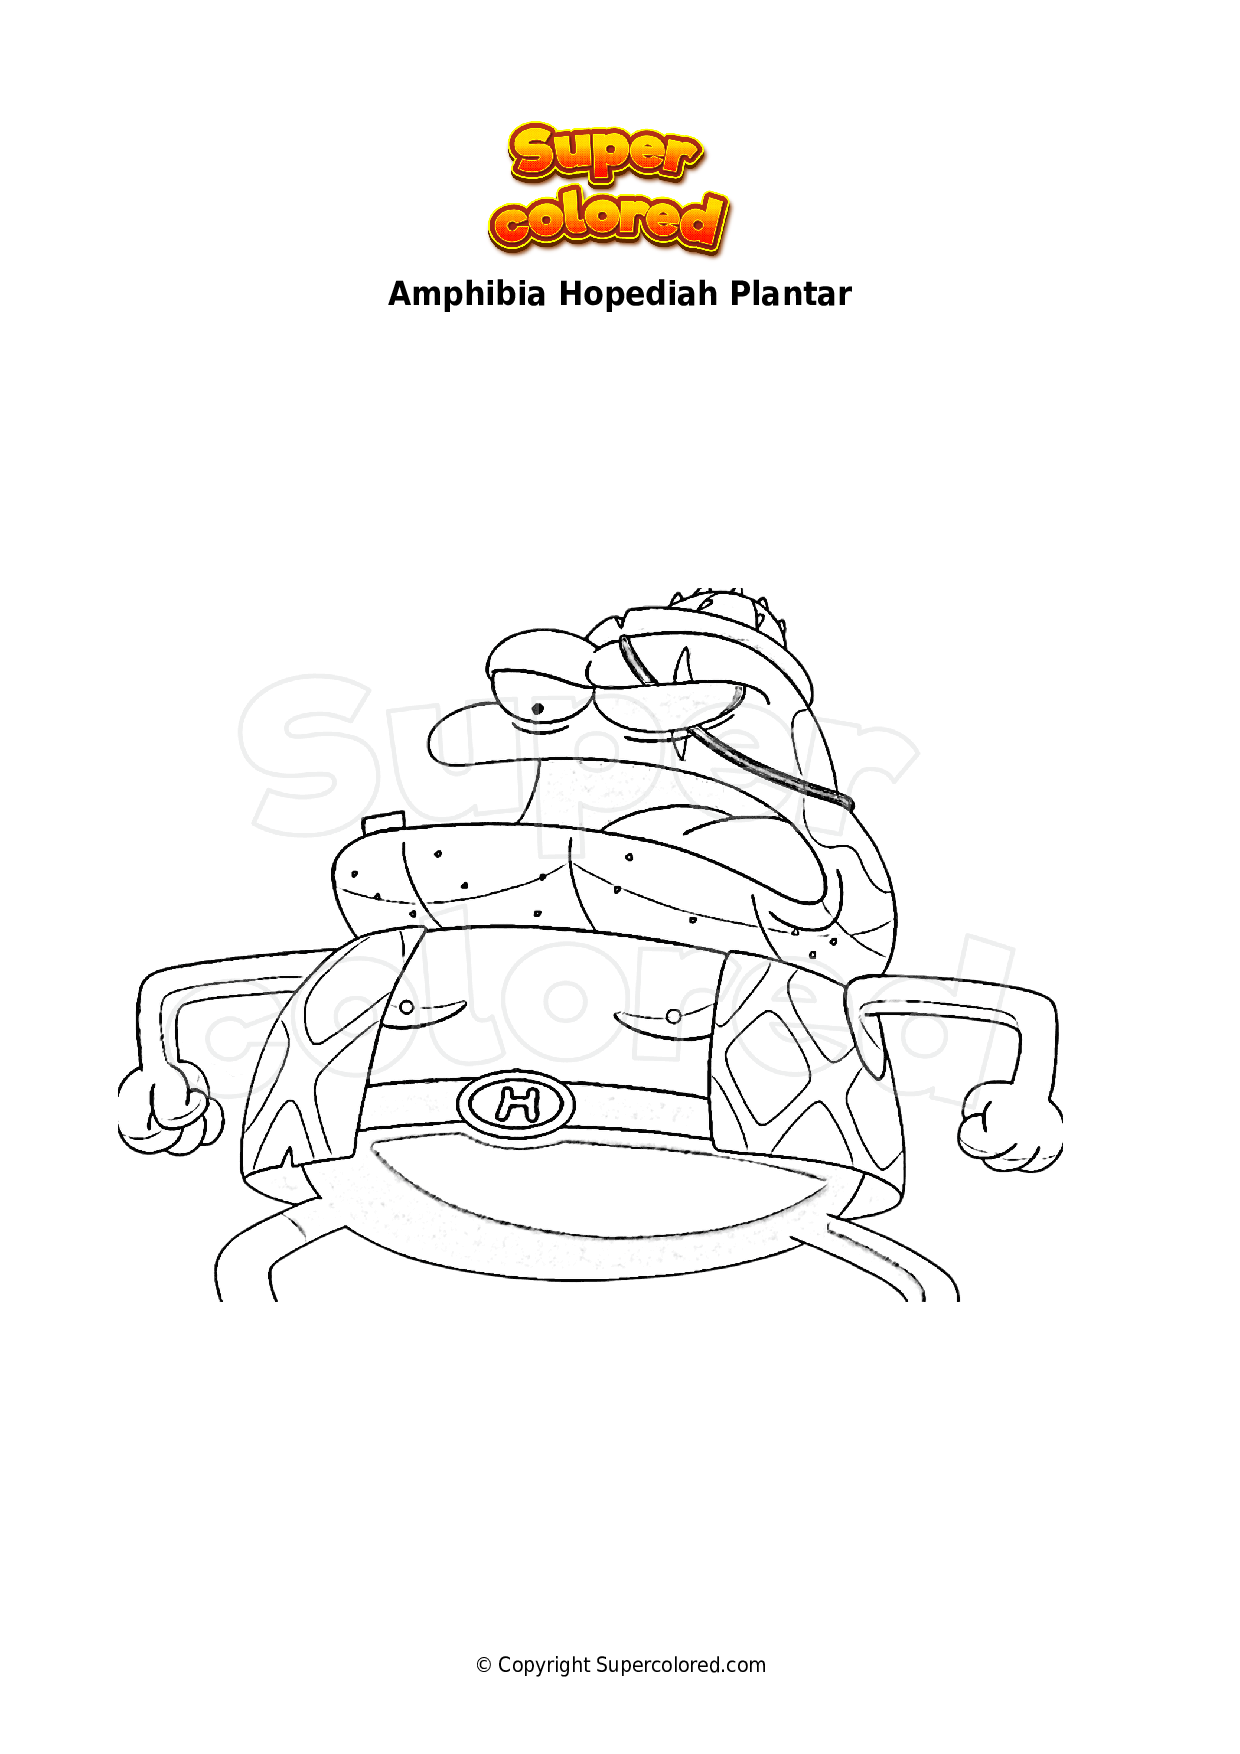 Ausmalbild Amphibia Hopediah Plantar - Supercolored.com